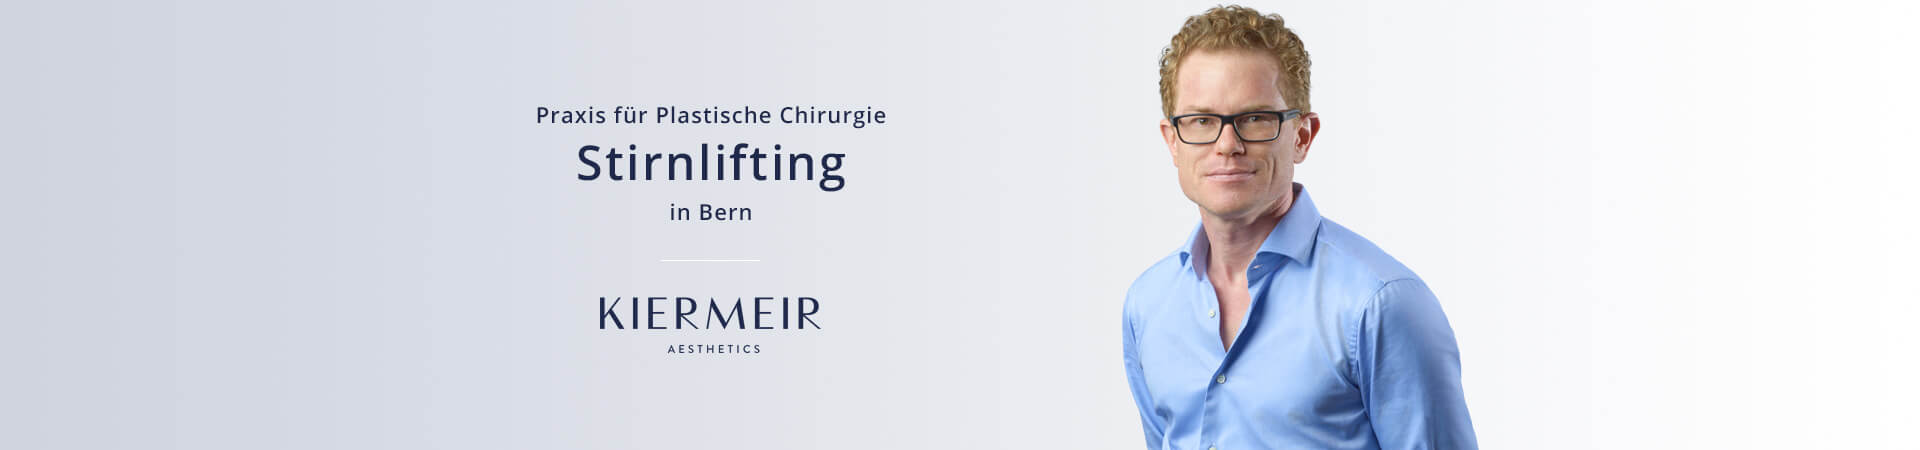 Stirnlifting in Bern - Dr. David Kiermeir 